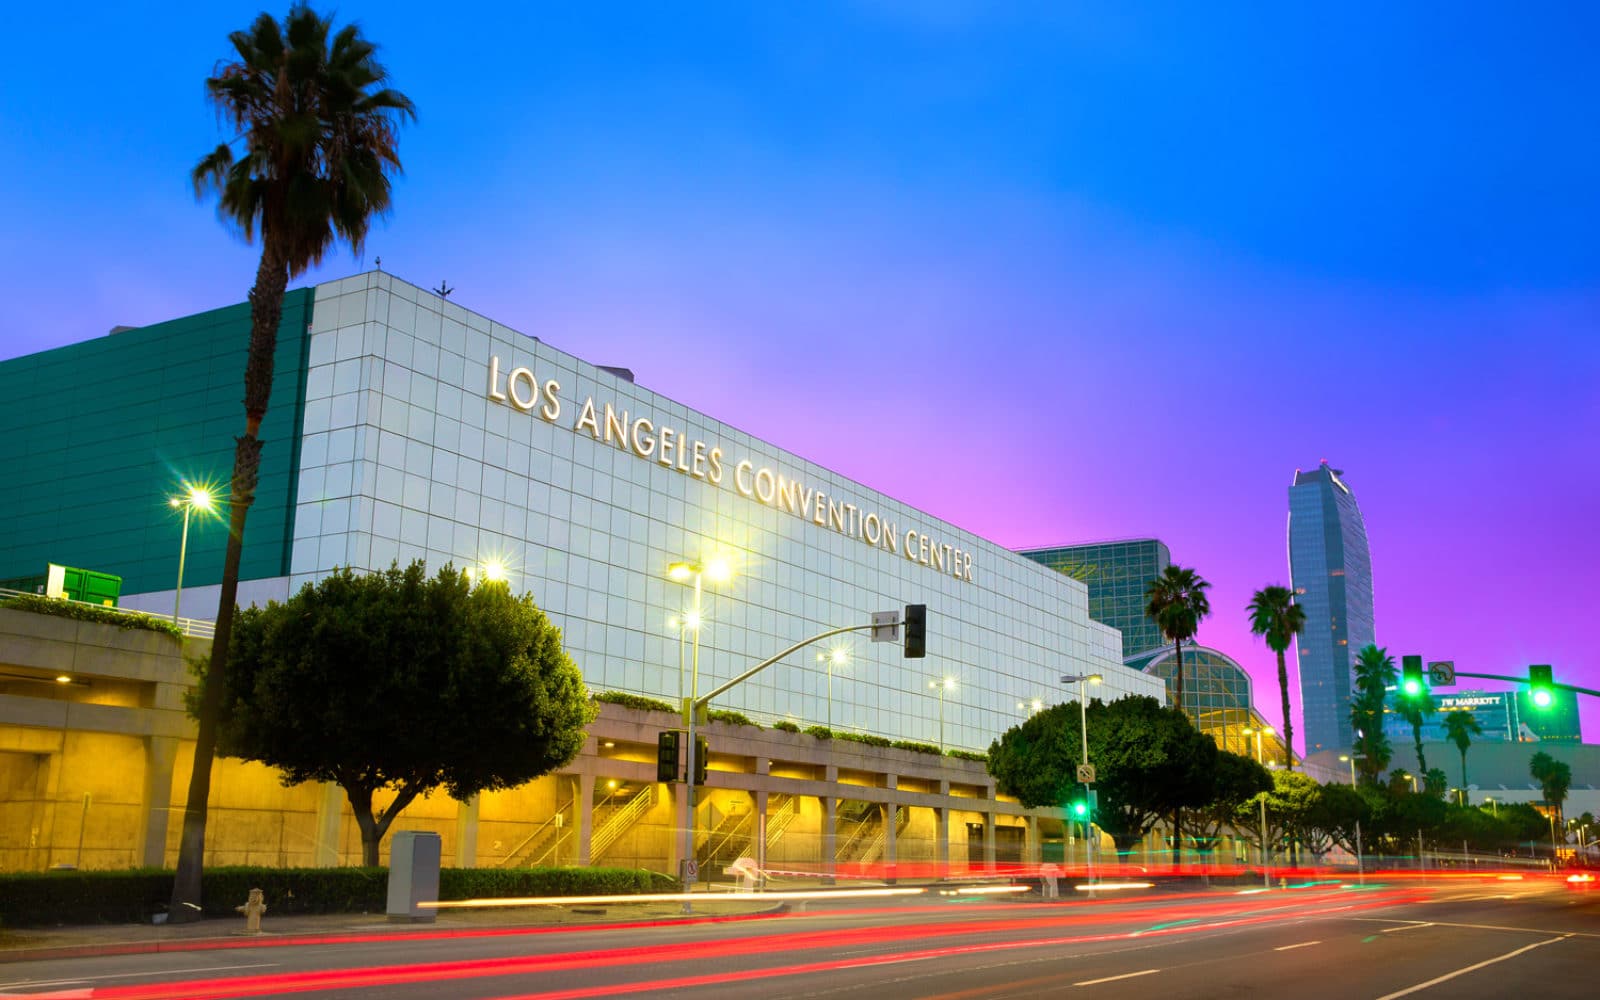 Los Angeles Convention Center in LA, California